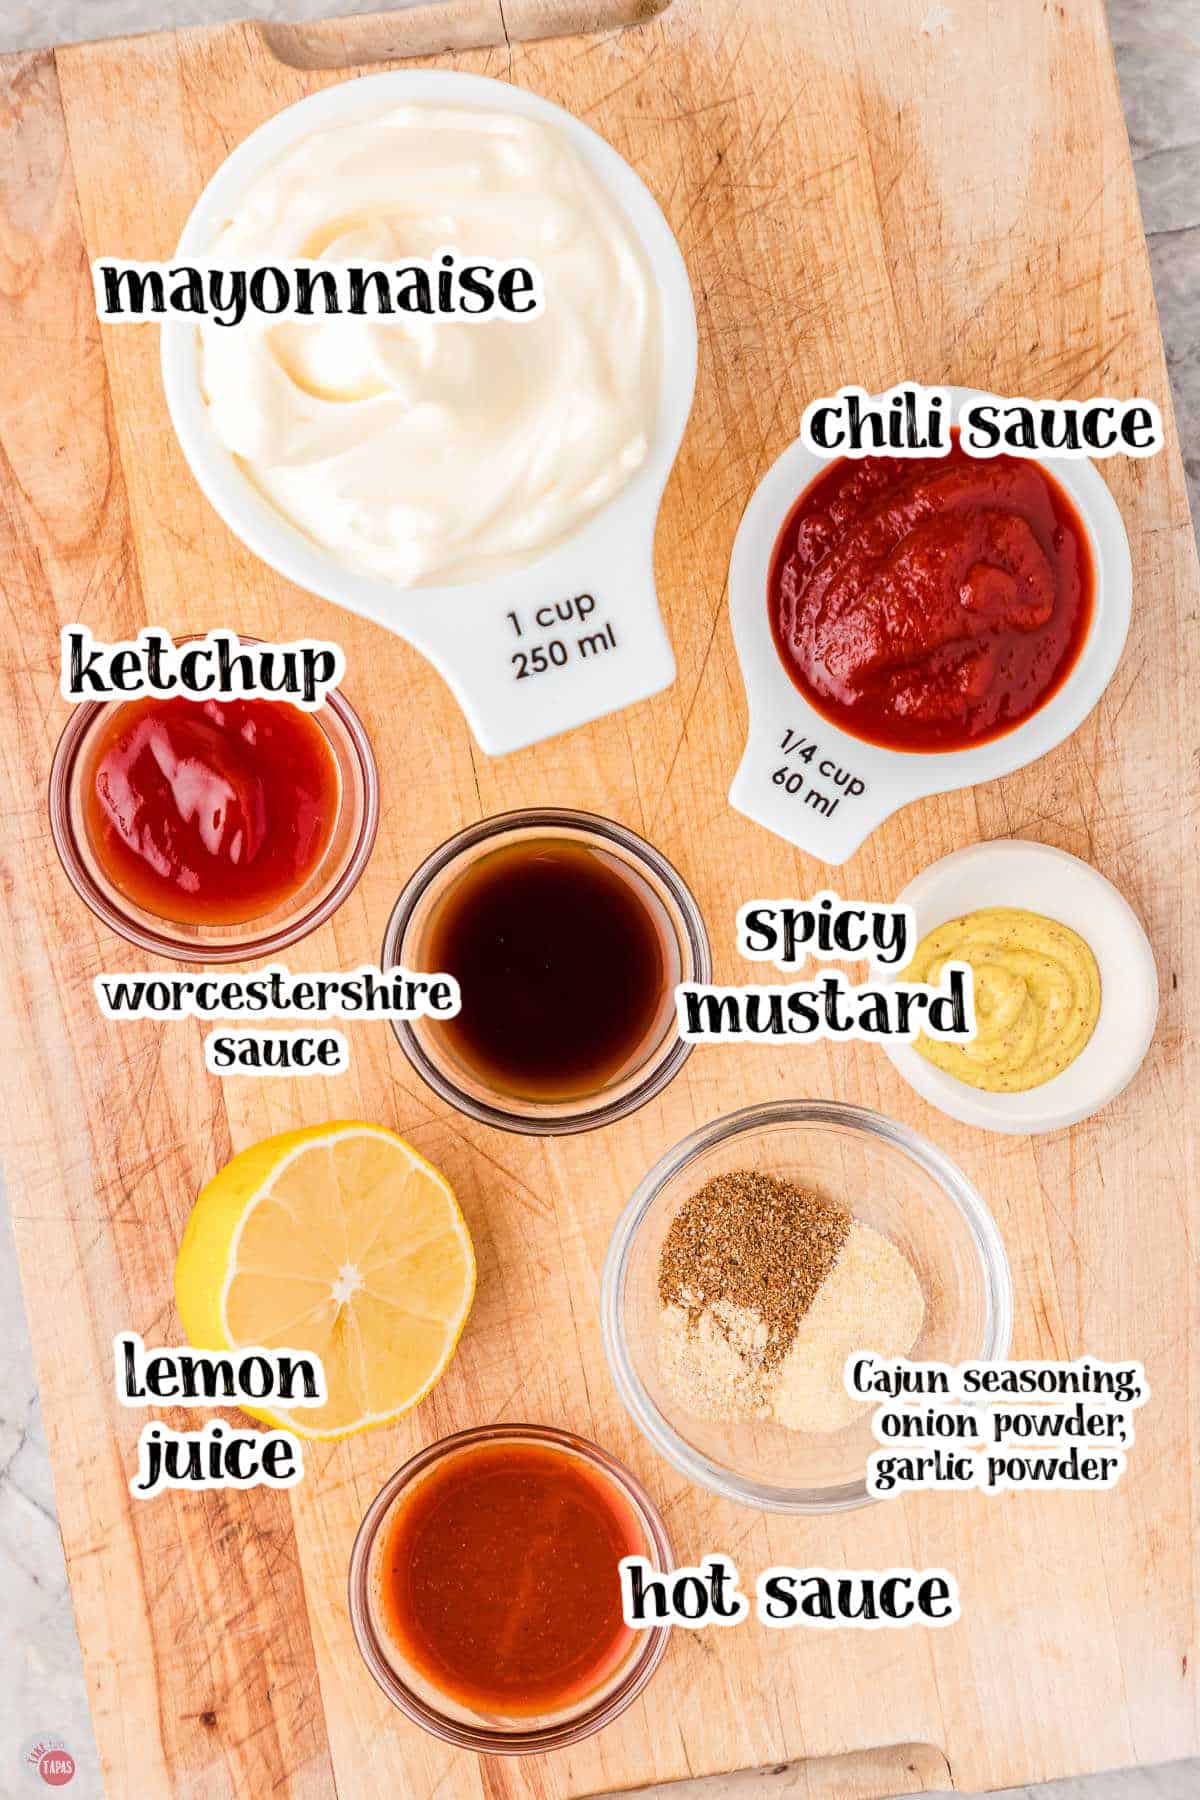 basic ingredients like a cup mayonnaise, cup ketchup, teaspoon garlic powder